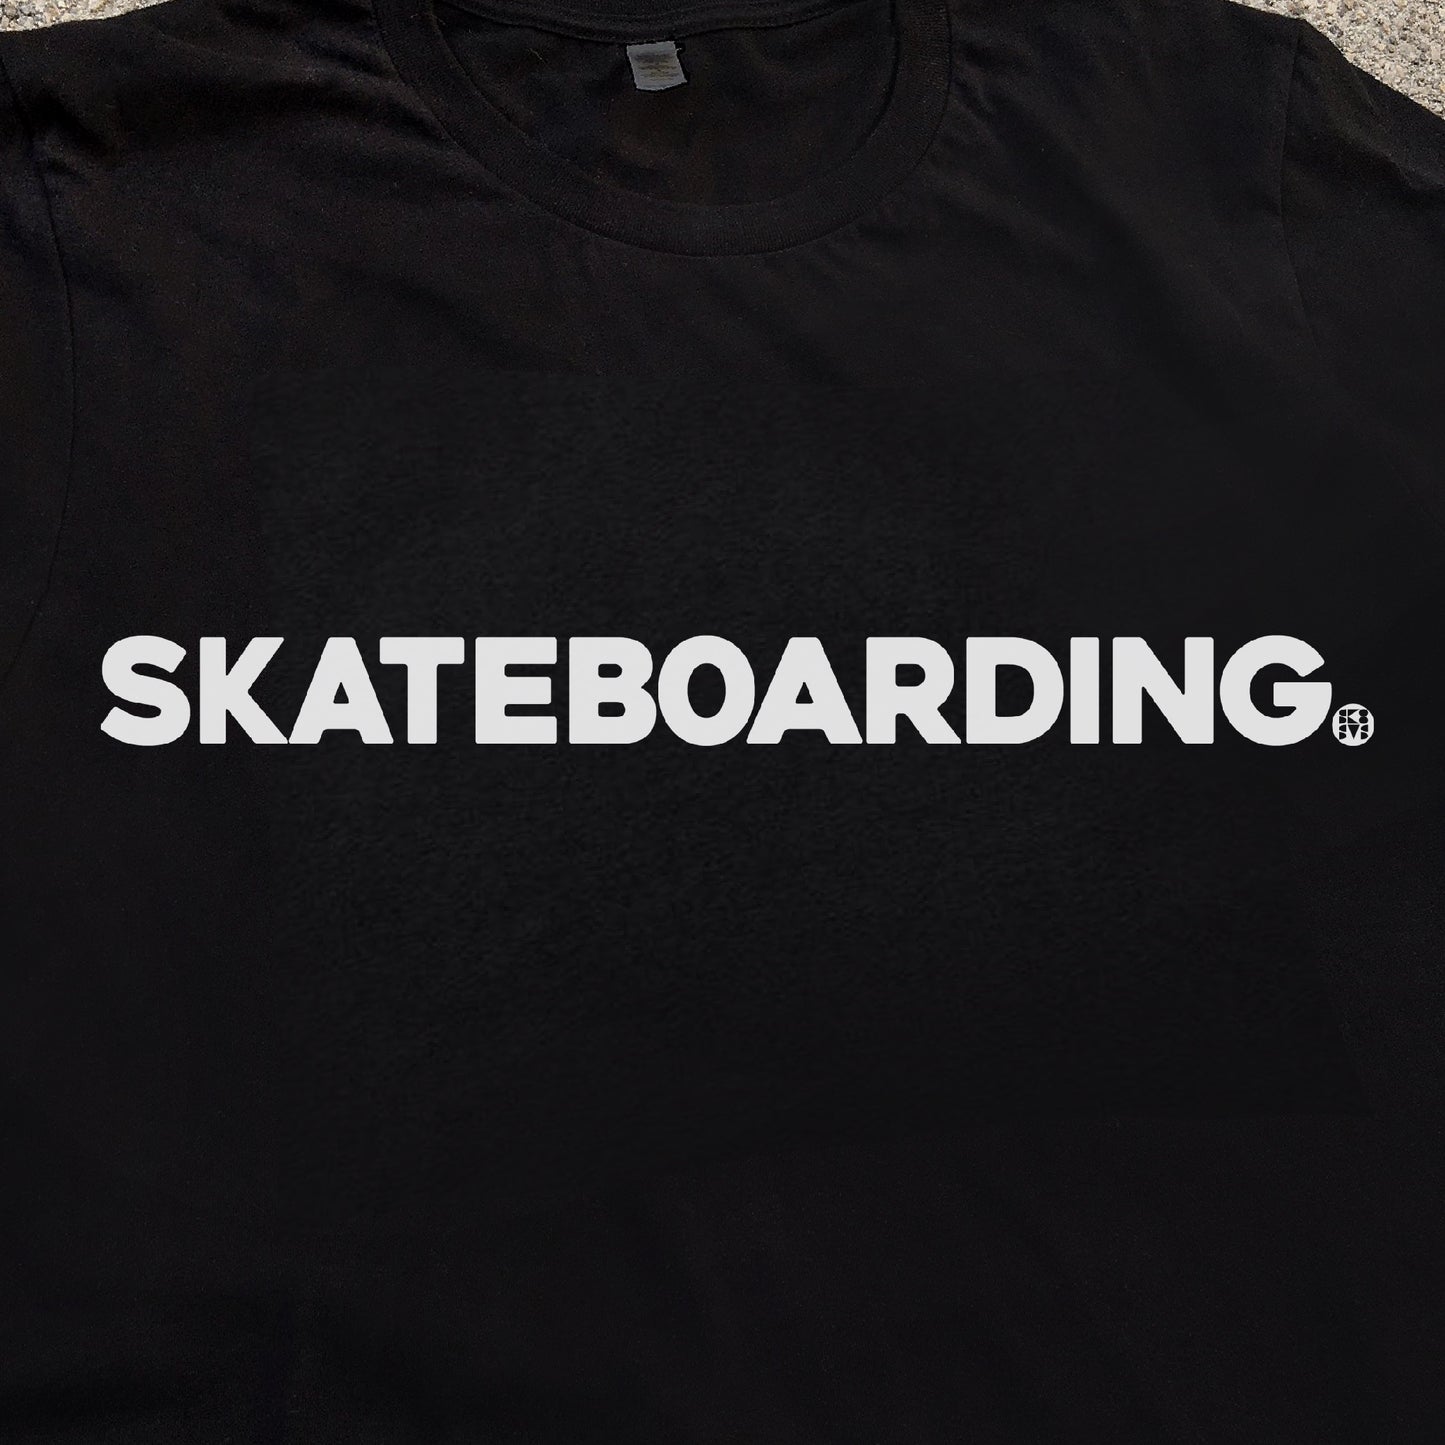 Skateboarding tee black